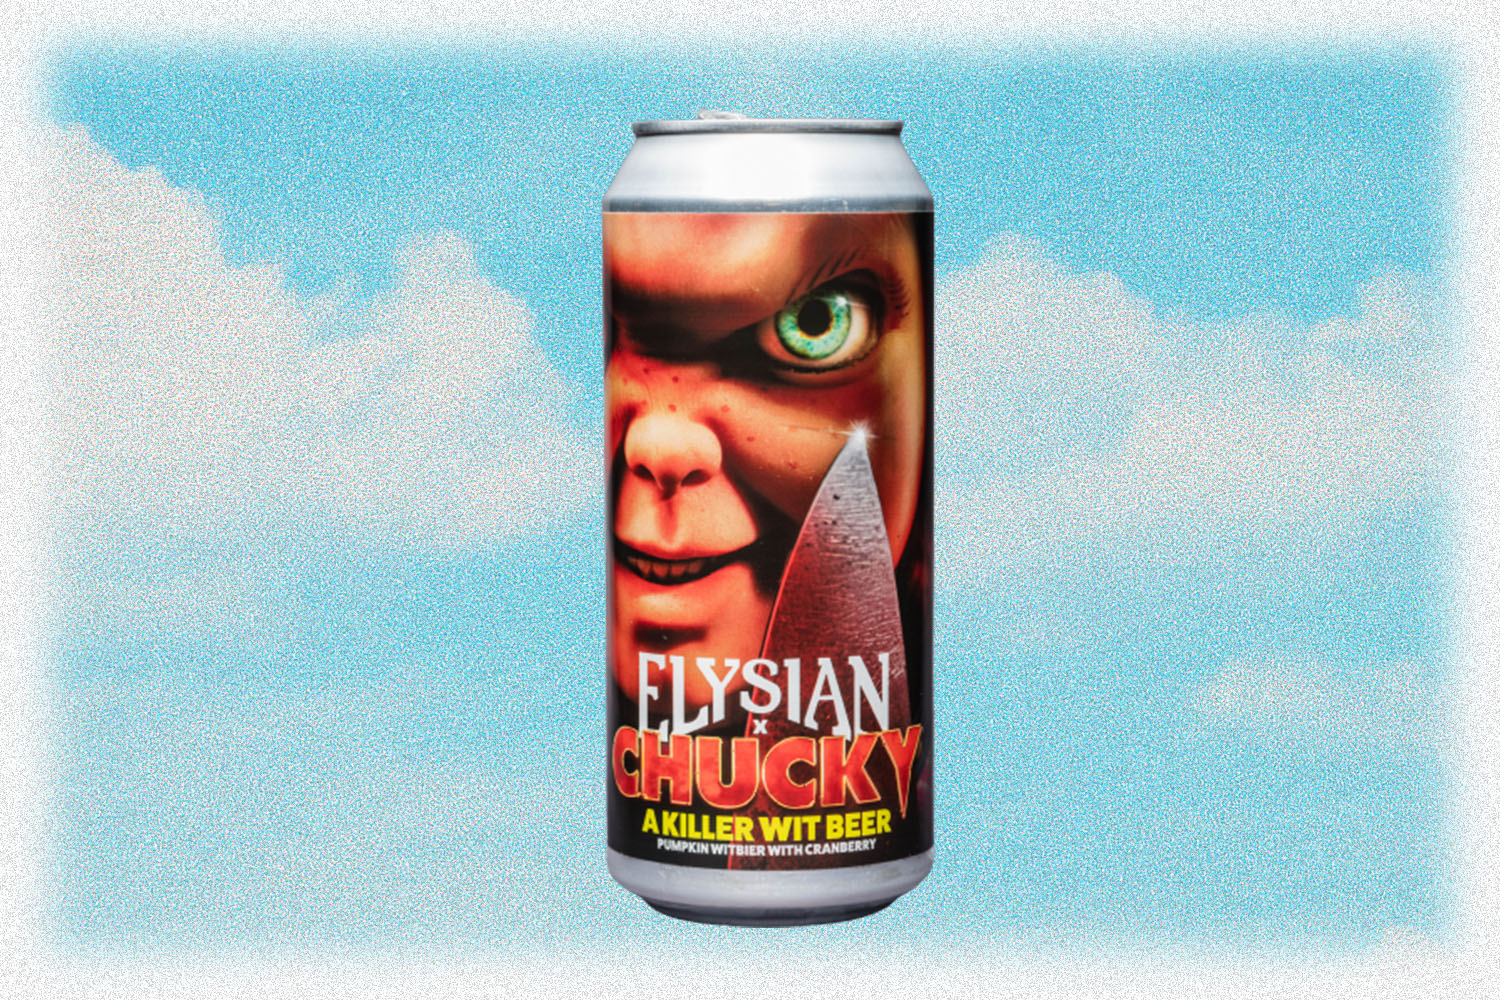 Chucky beer